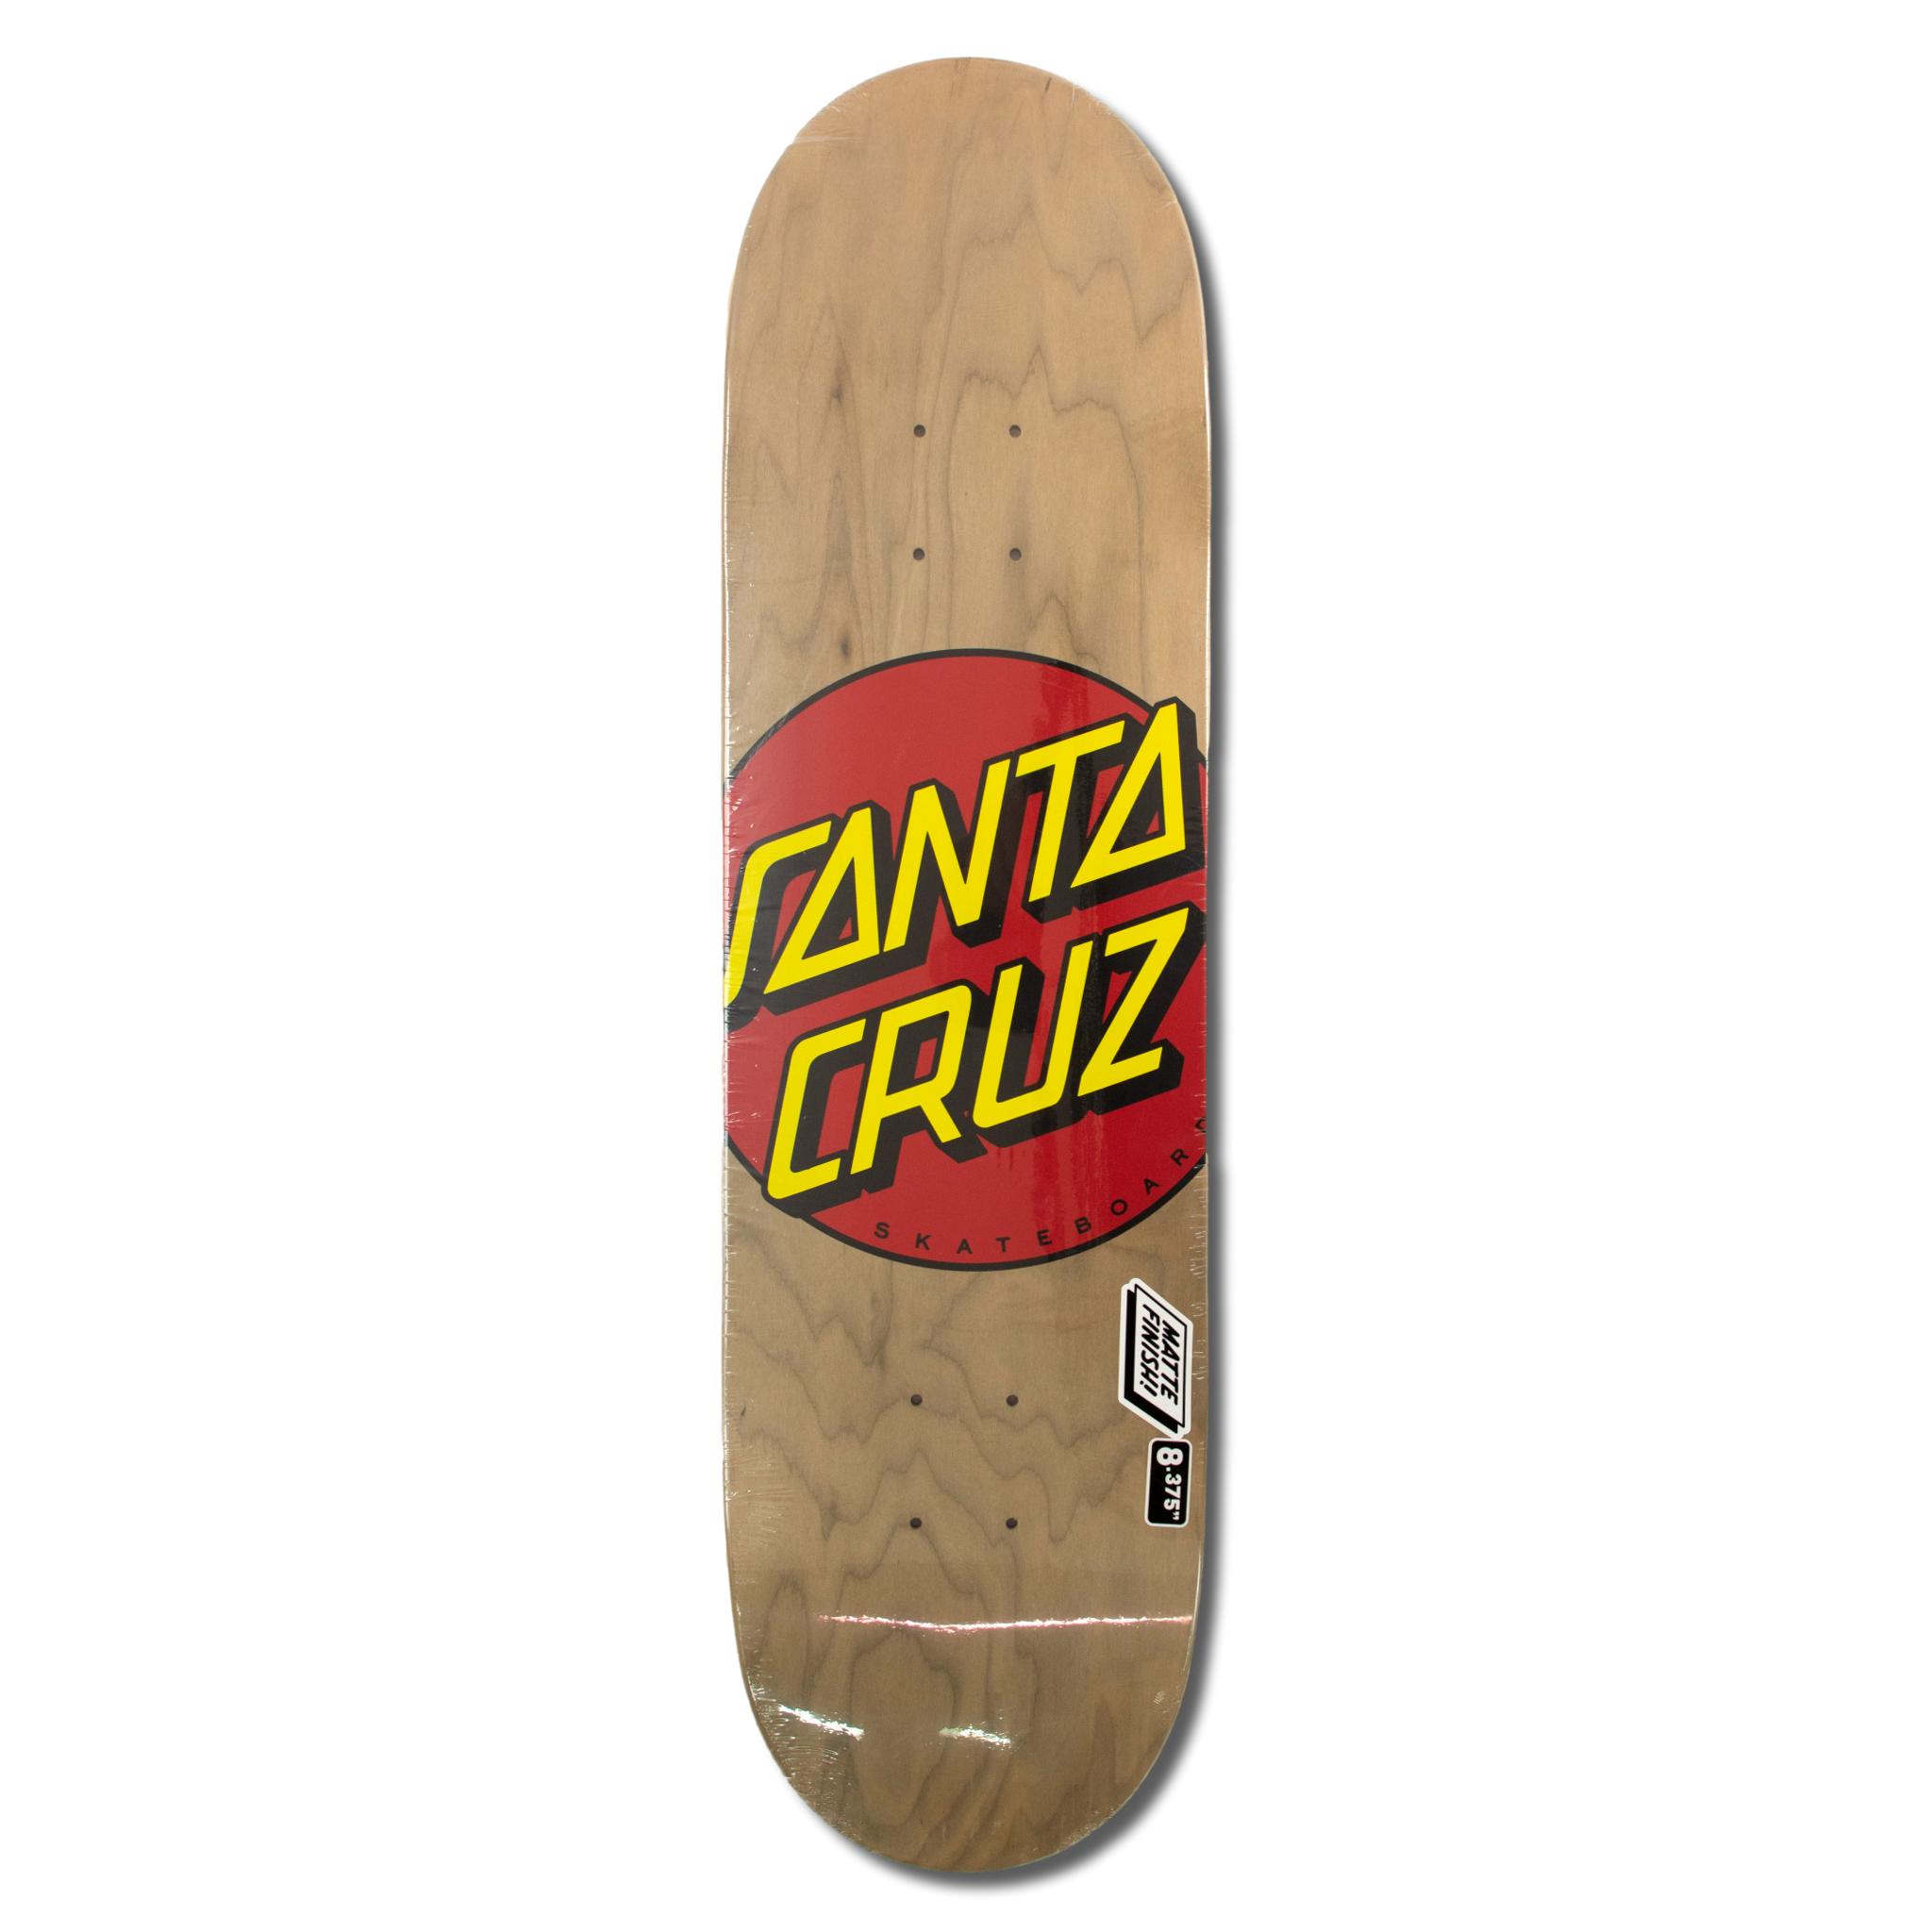 Santa Cruz dot full classic skate 8.375